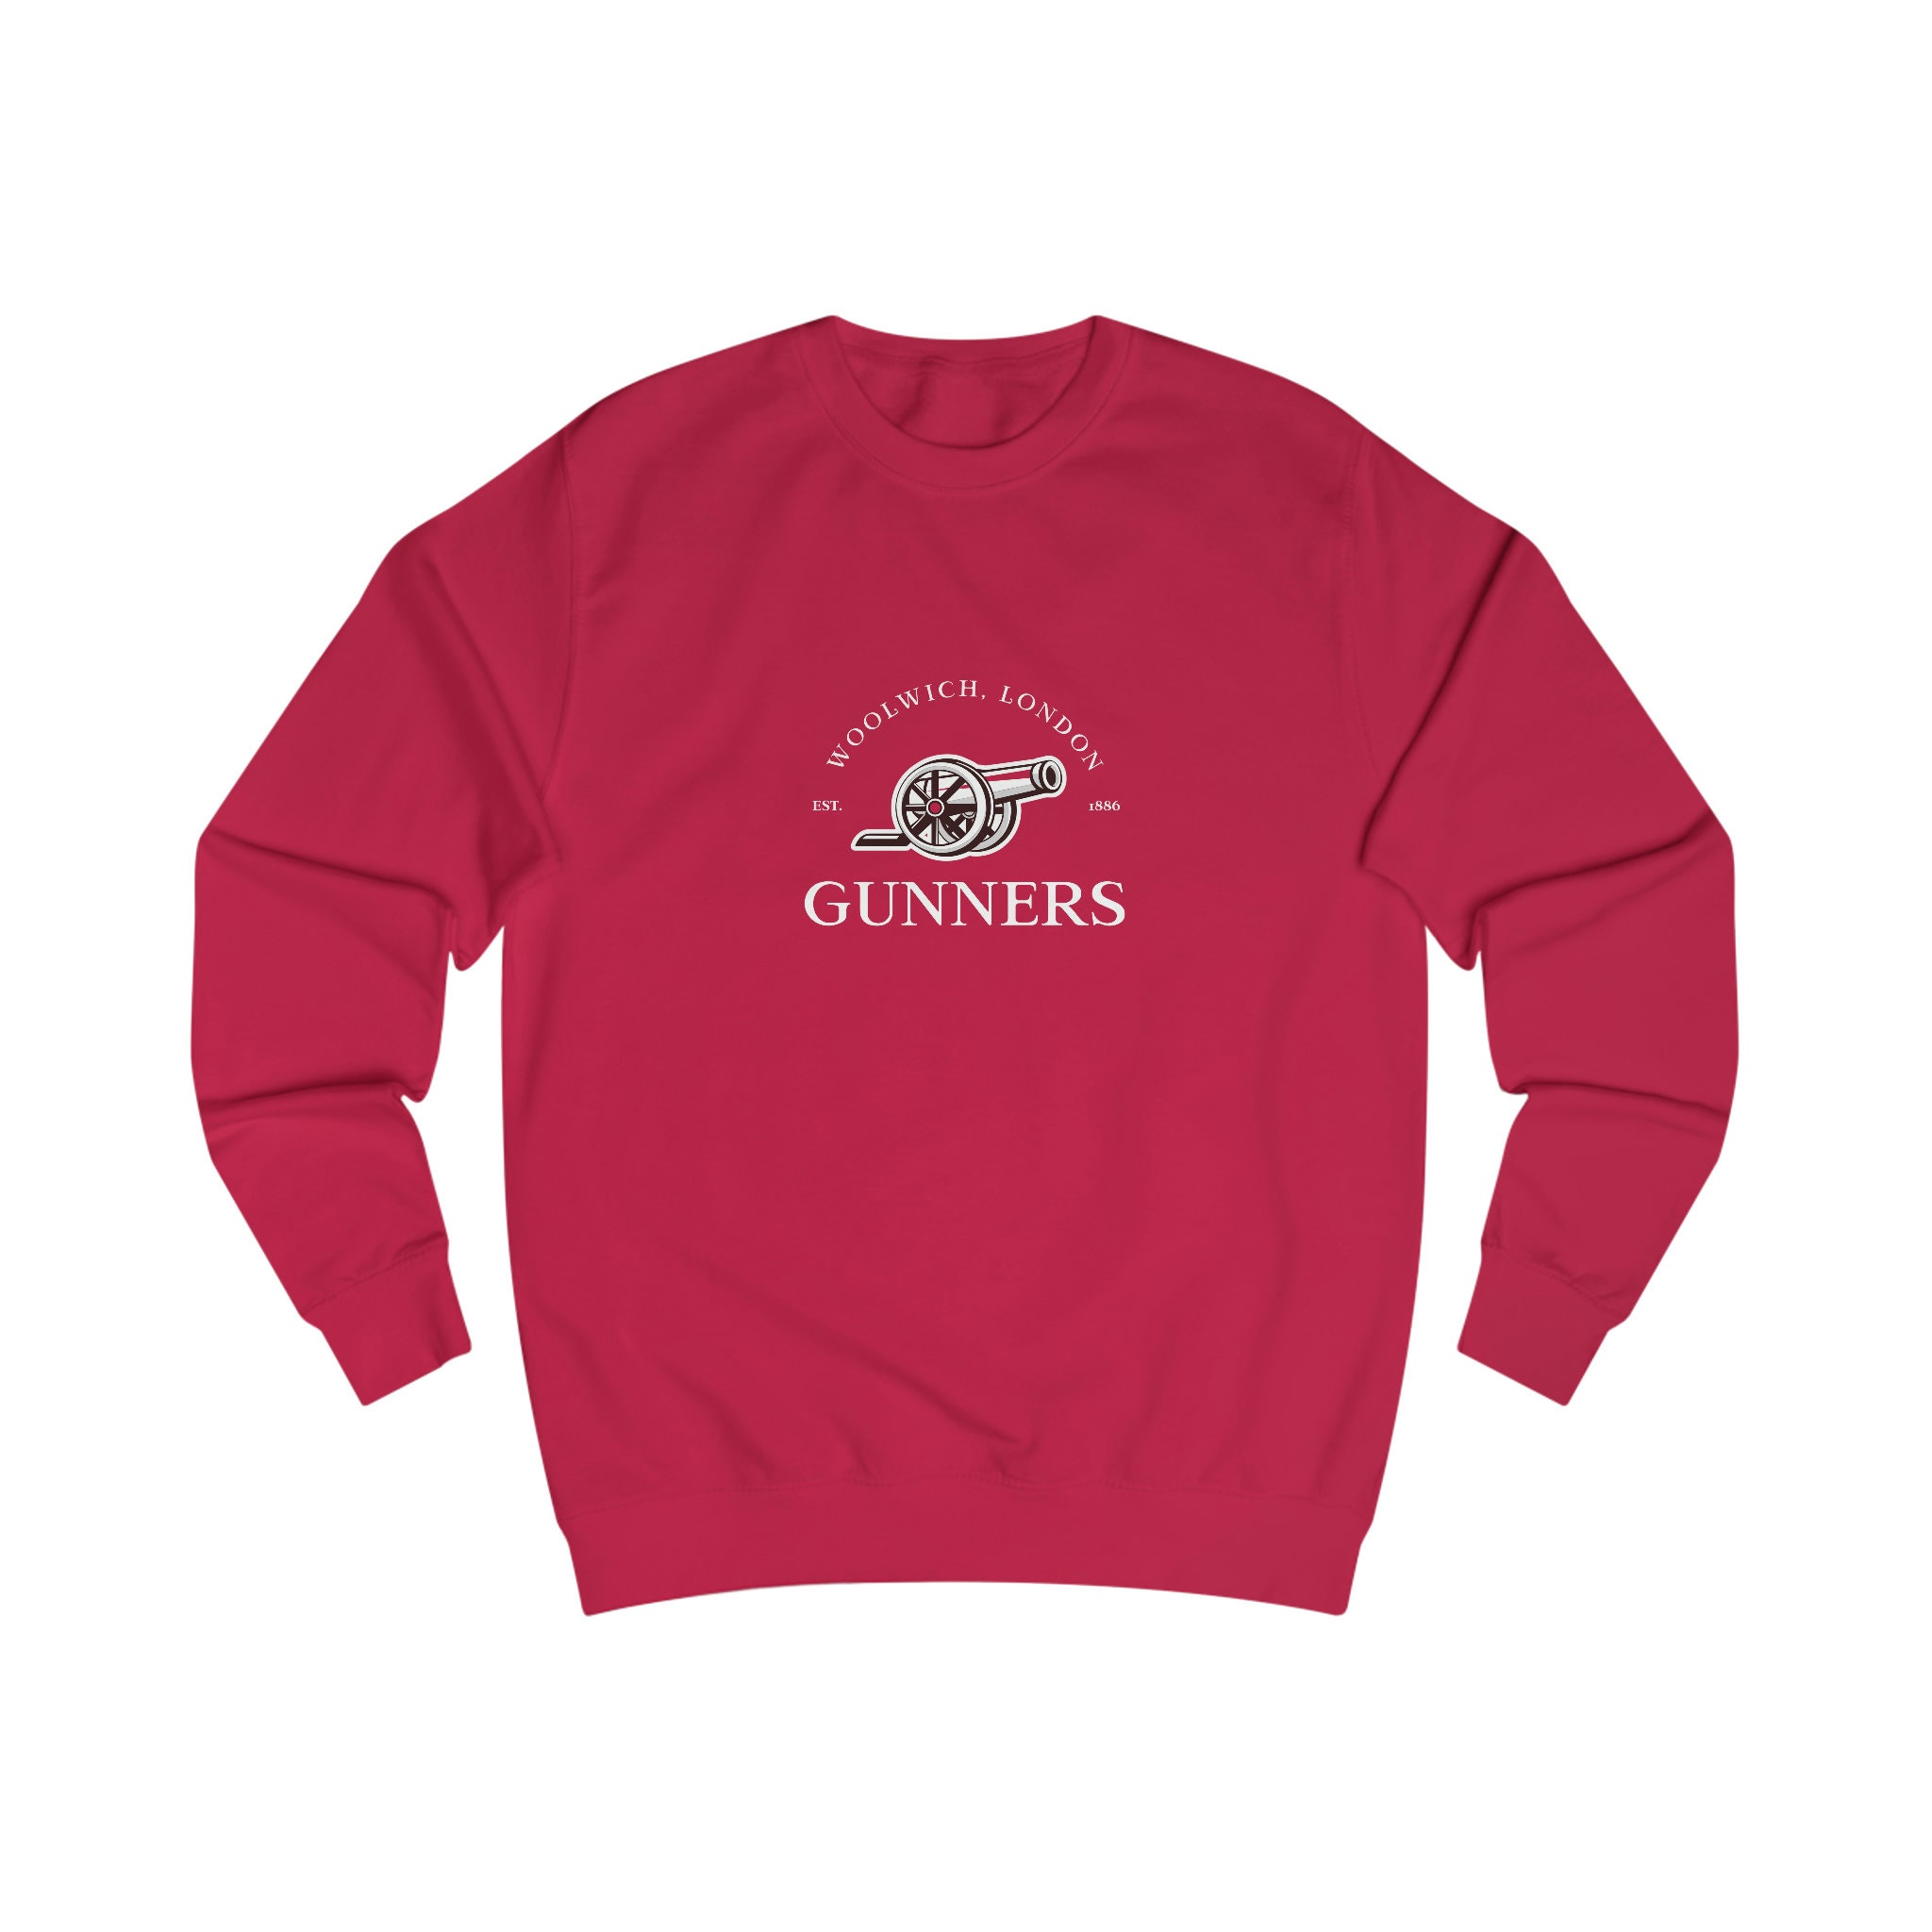 Gunners Clothing - Etsy